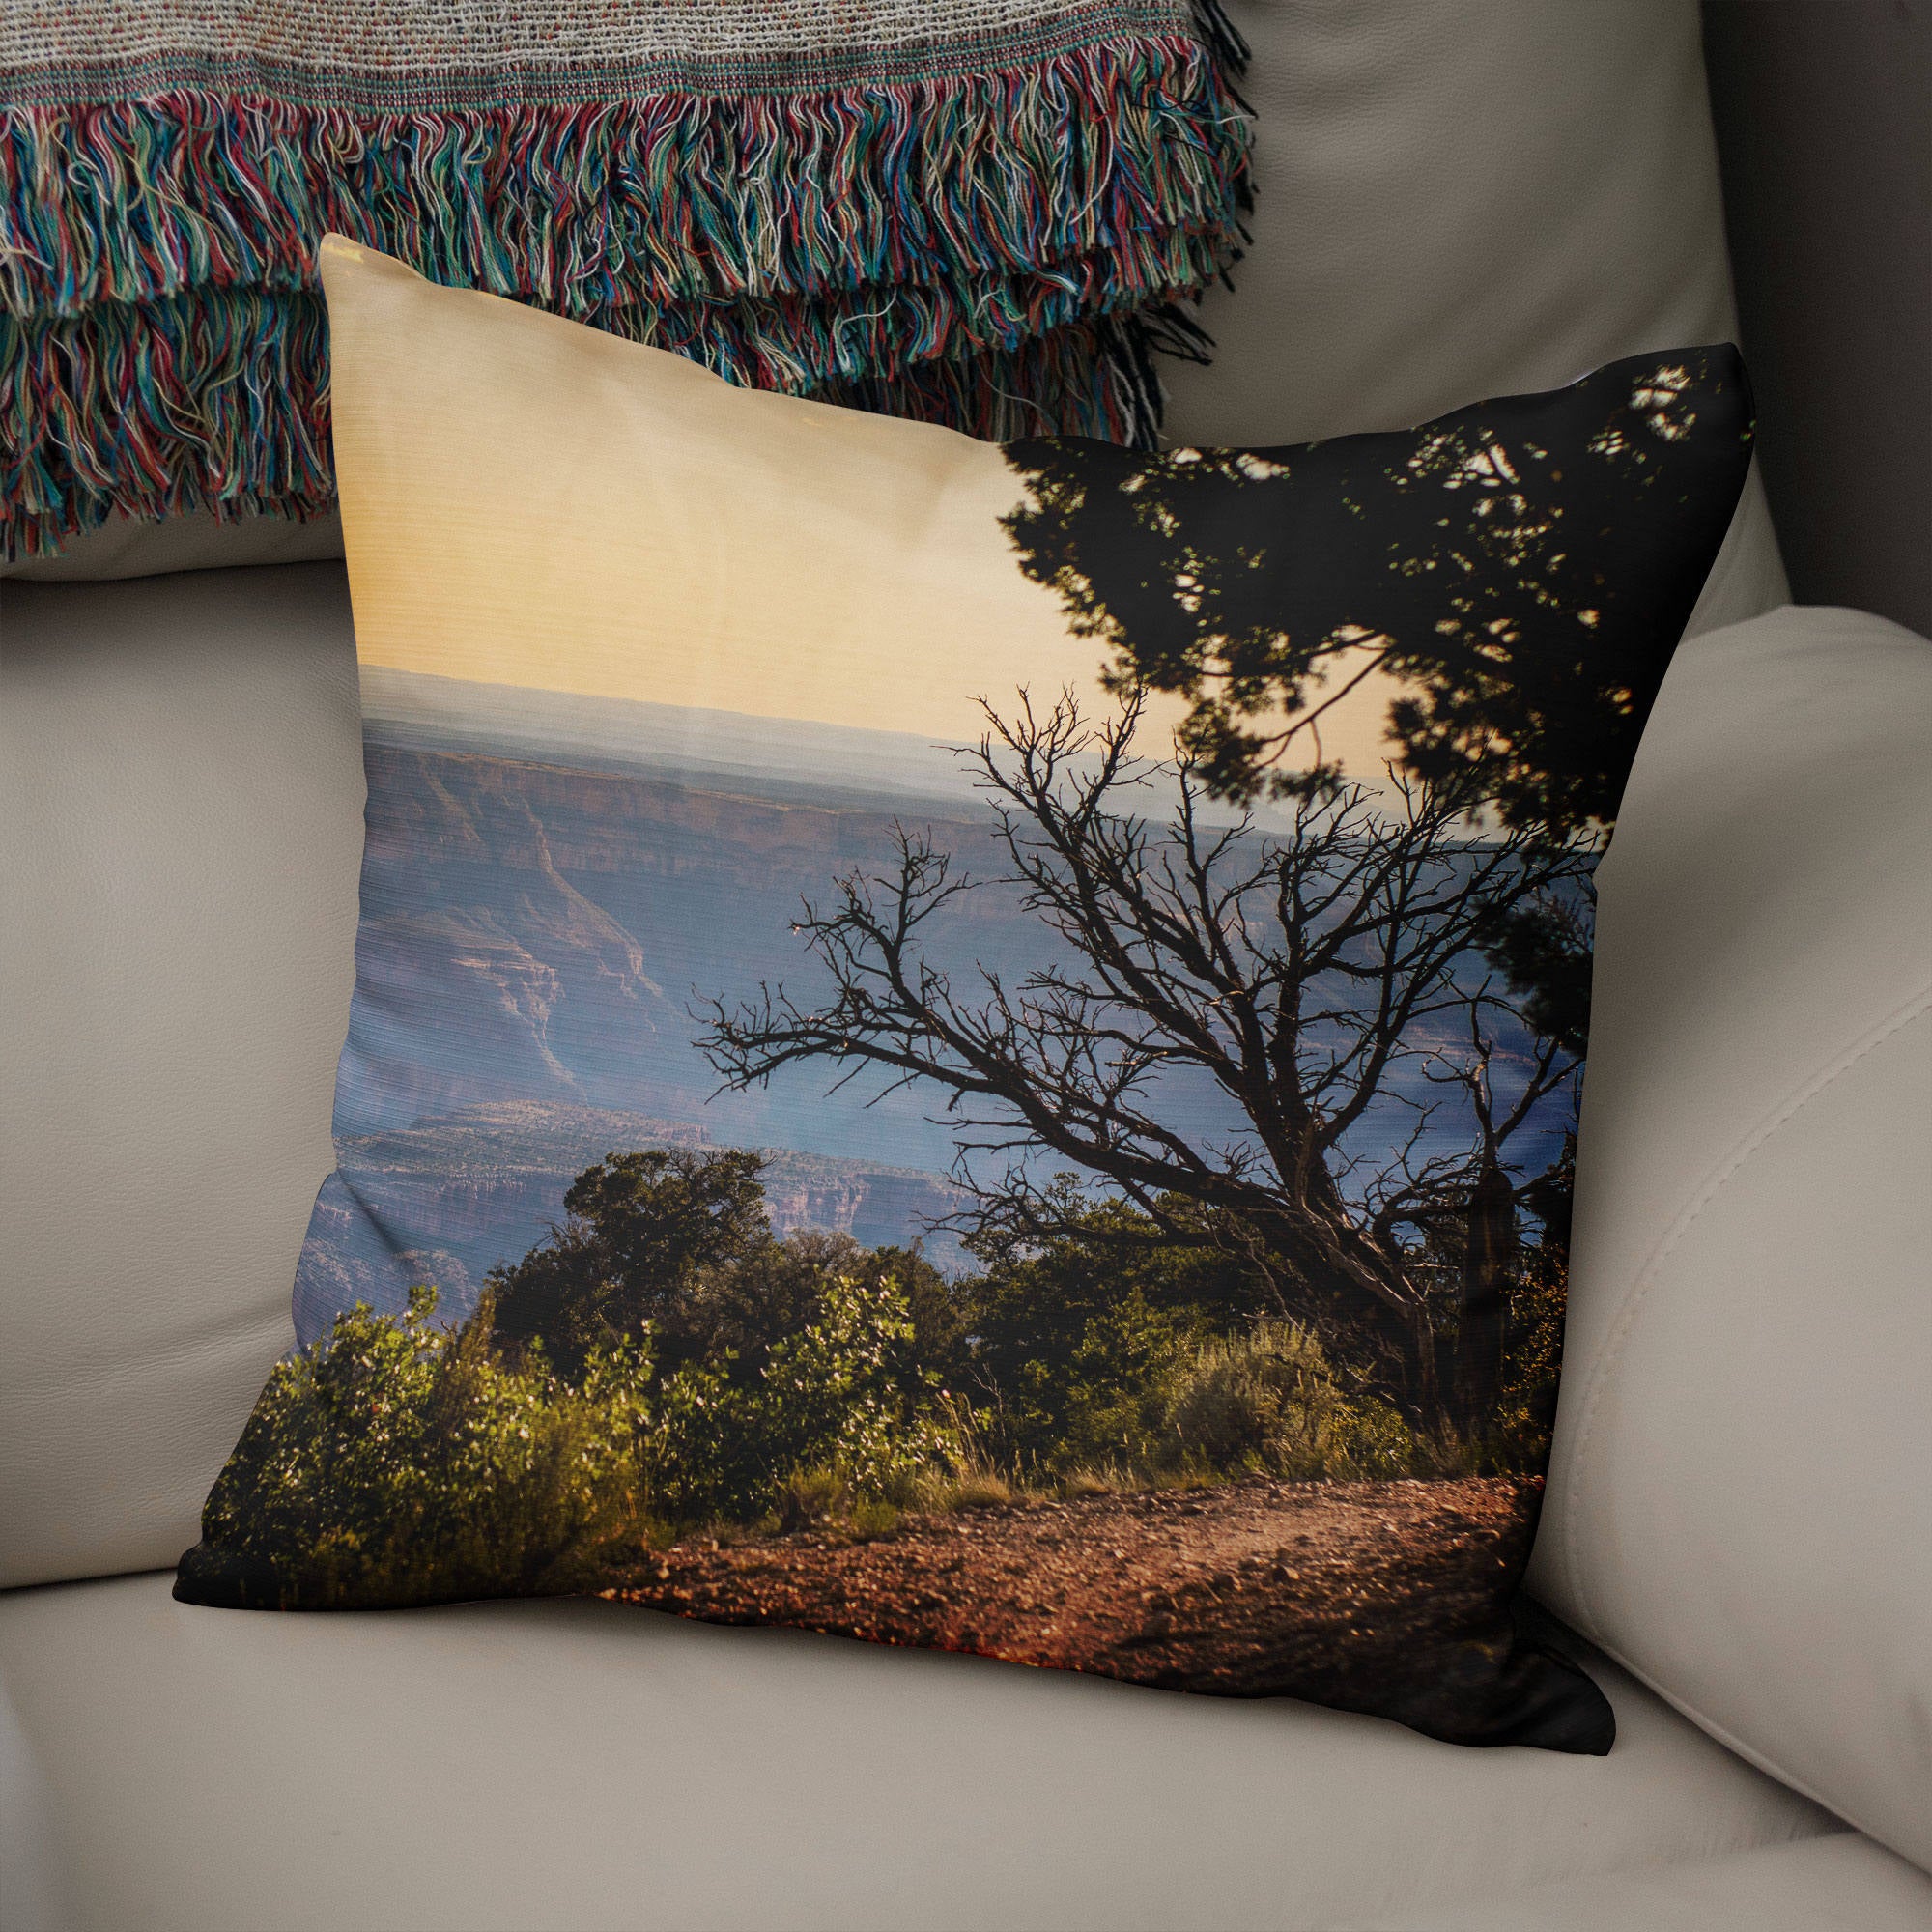 Arizona Desert Throw Pillow Cover Grand Canyon - Pillows